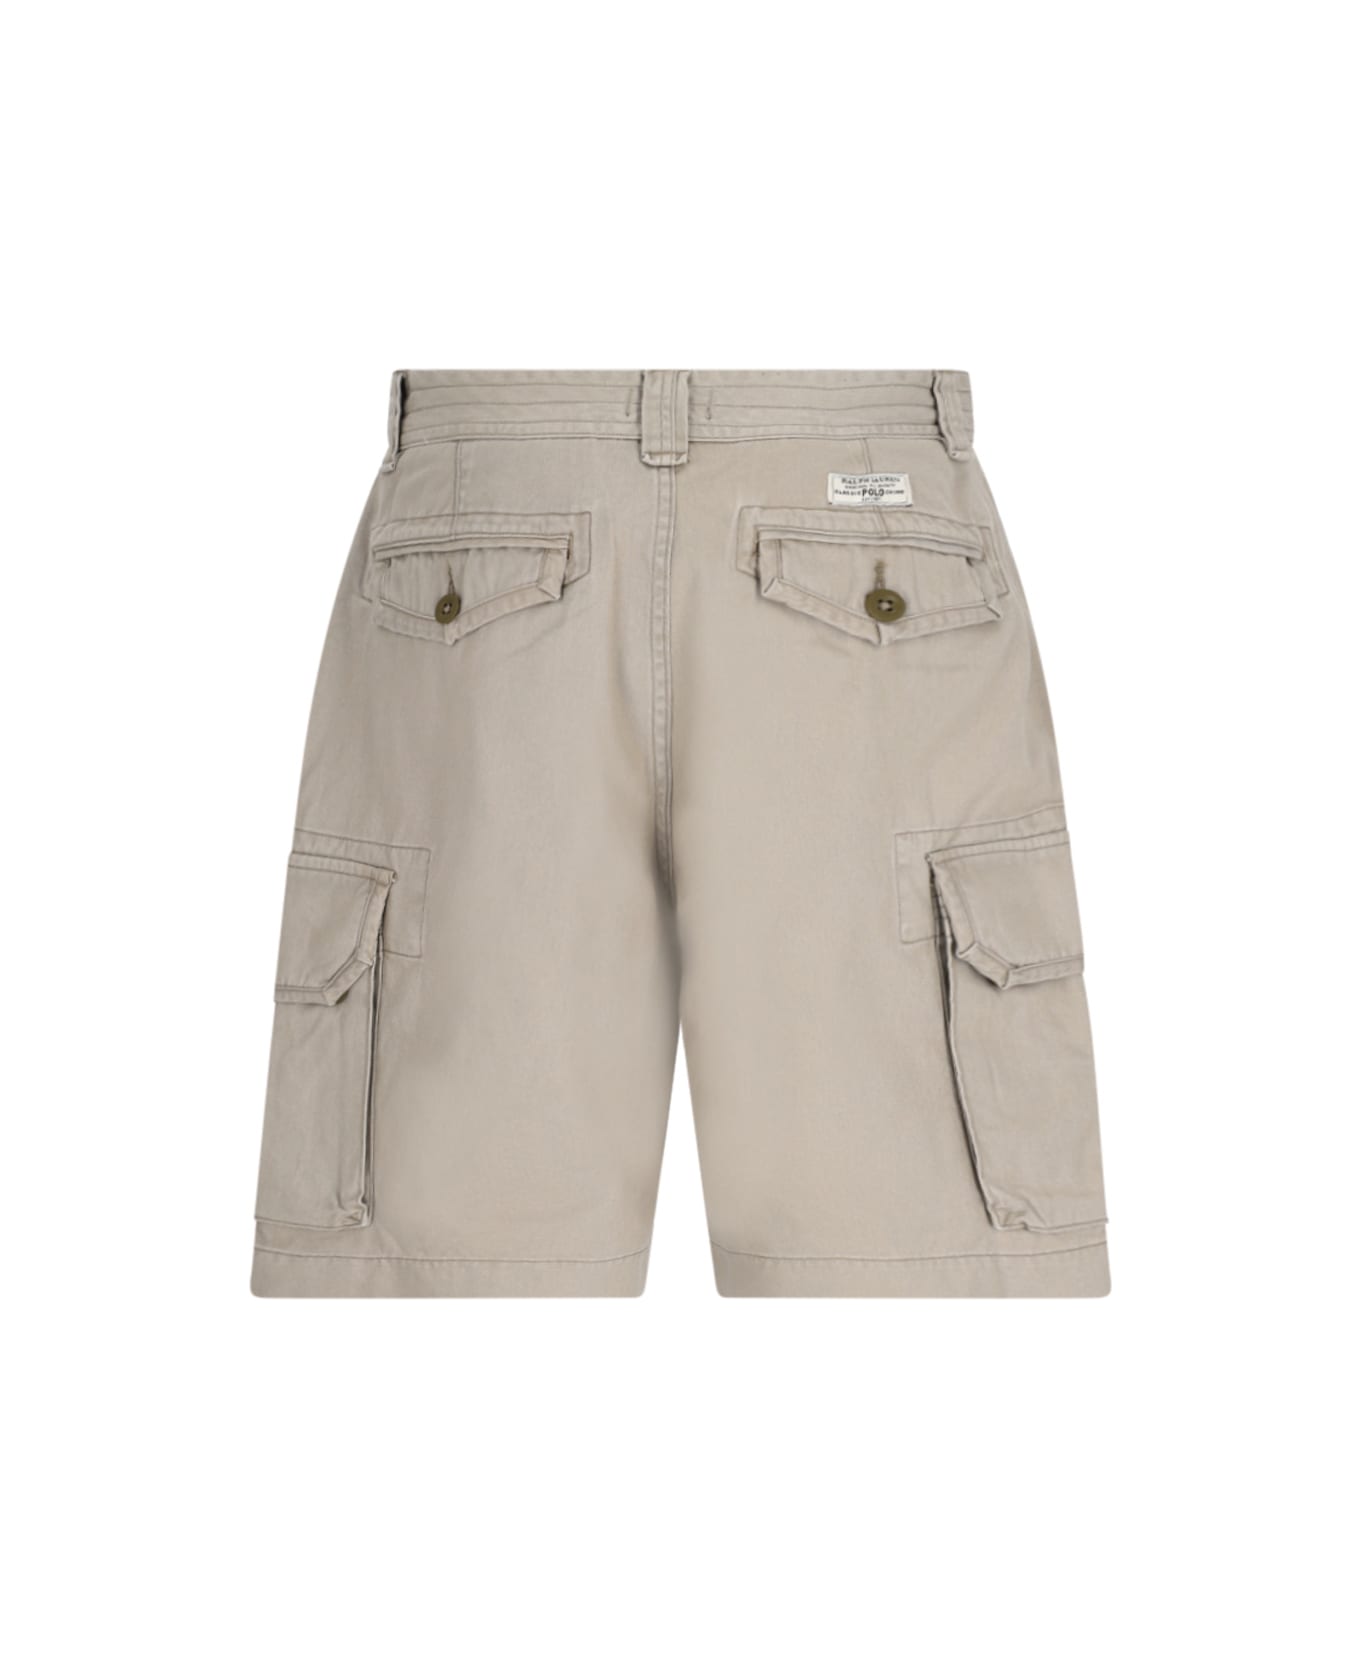 Polo Ralph Lauren Cargo Shorts - Taupe